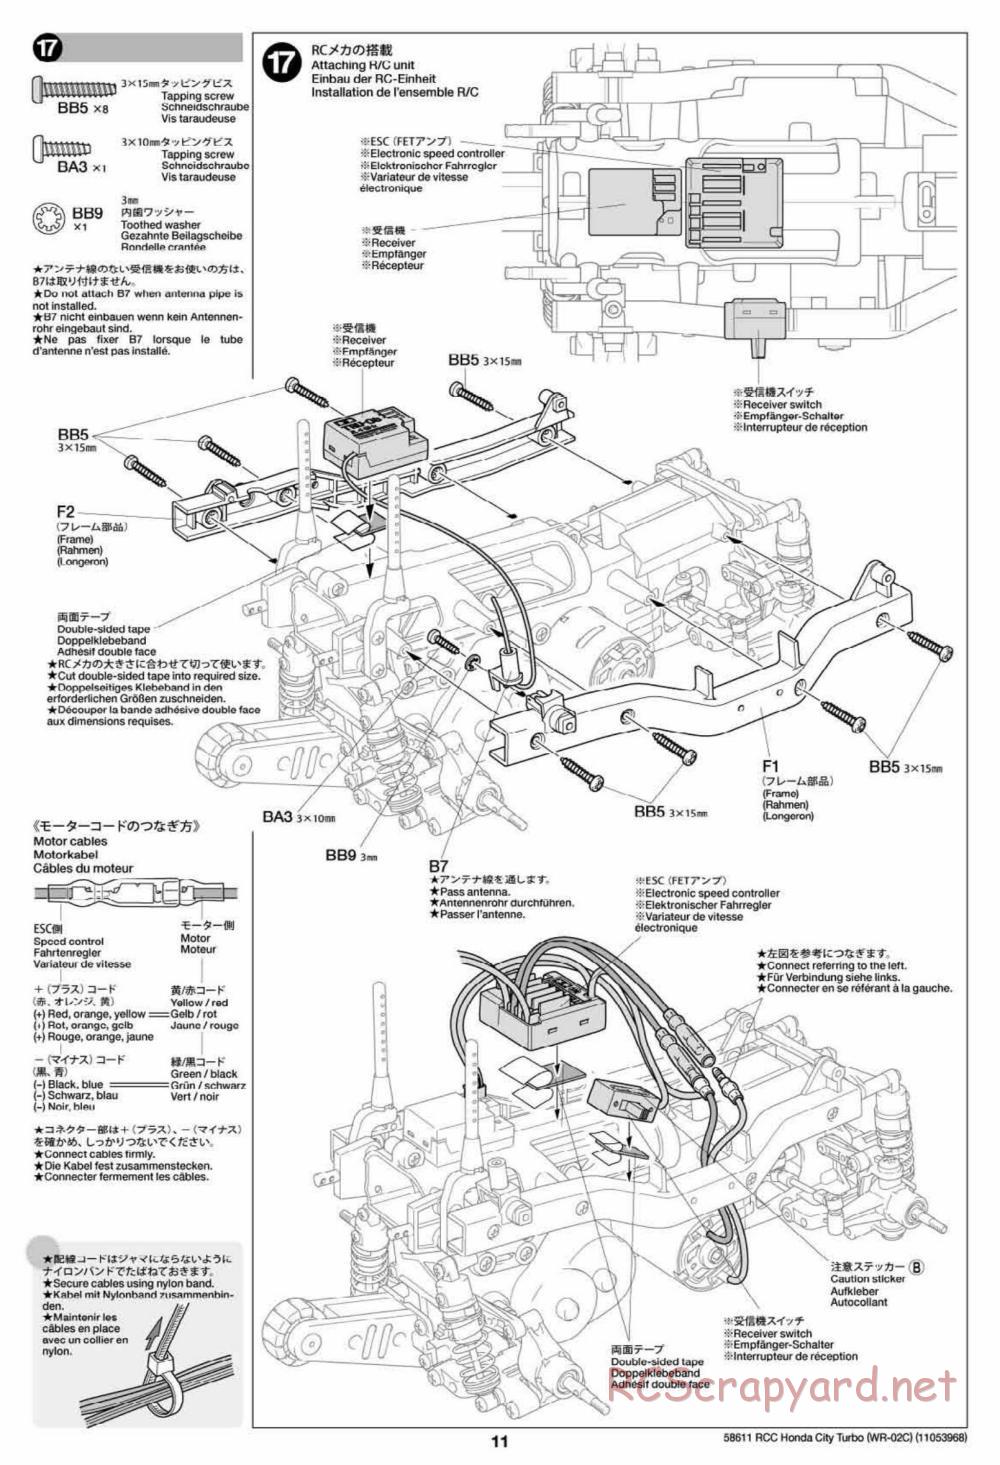 Tamiya - WR-02C Chassis - Manual - Page 11